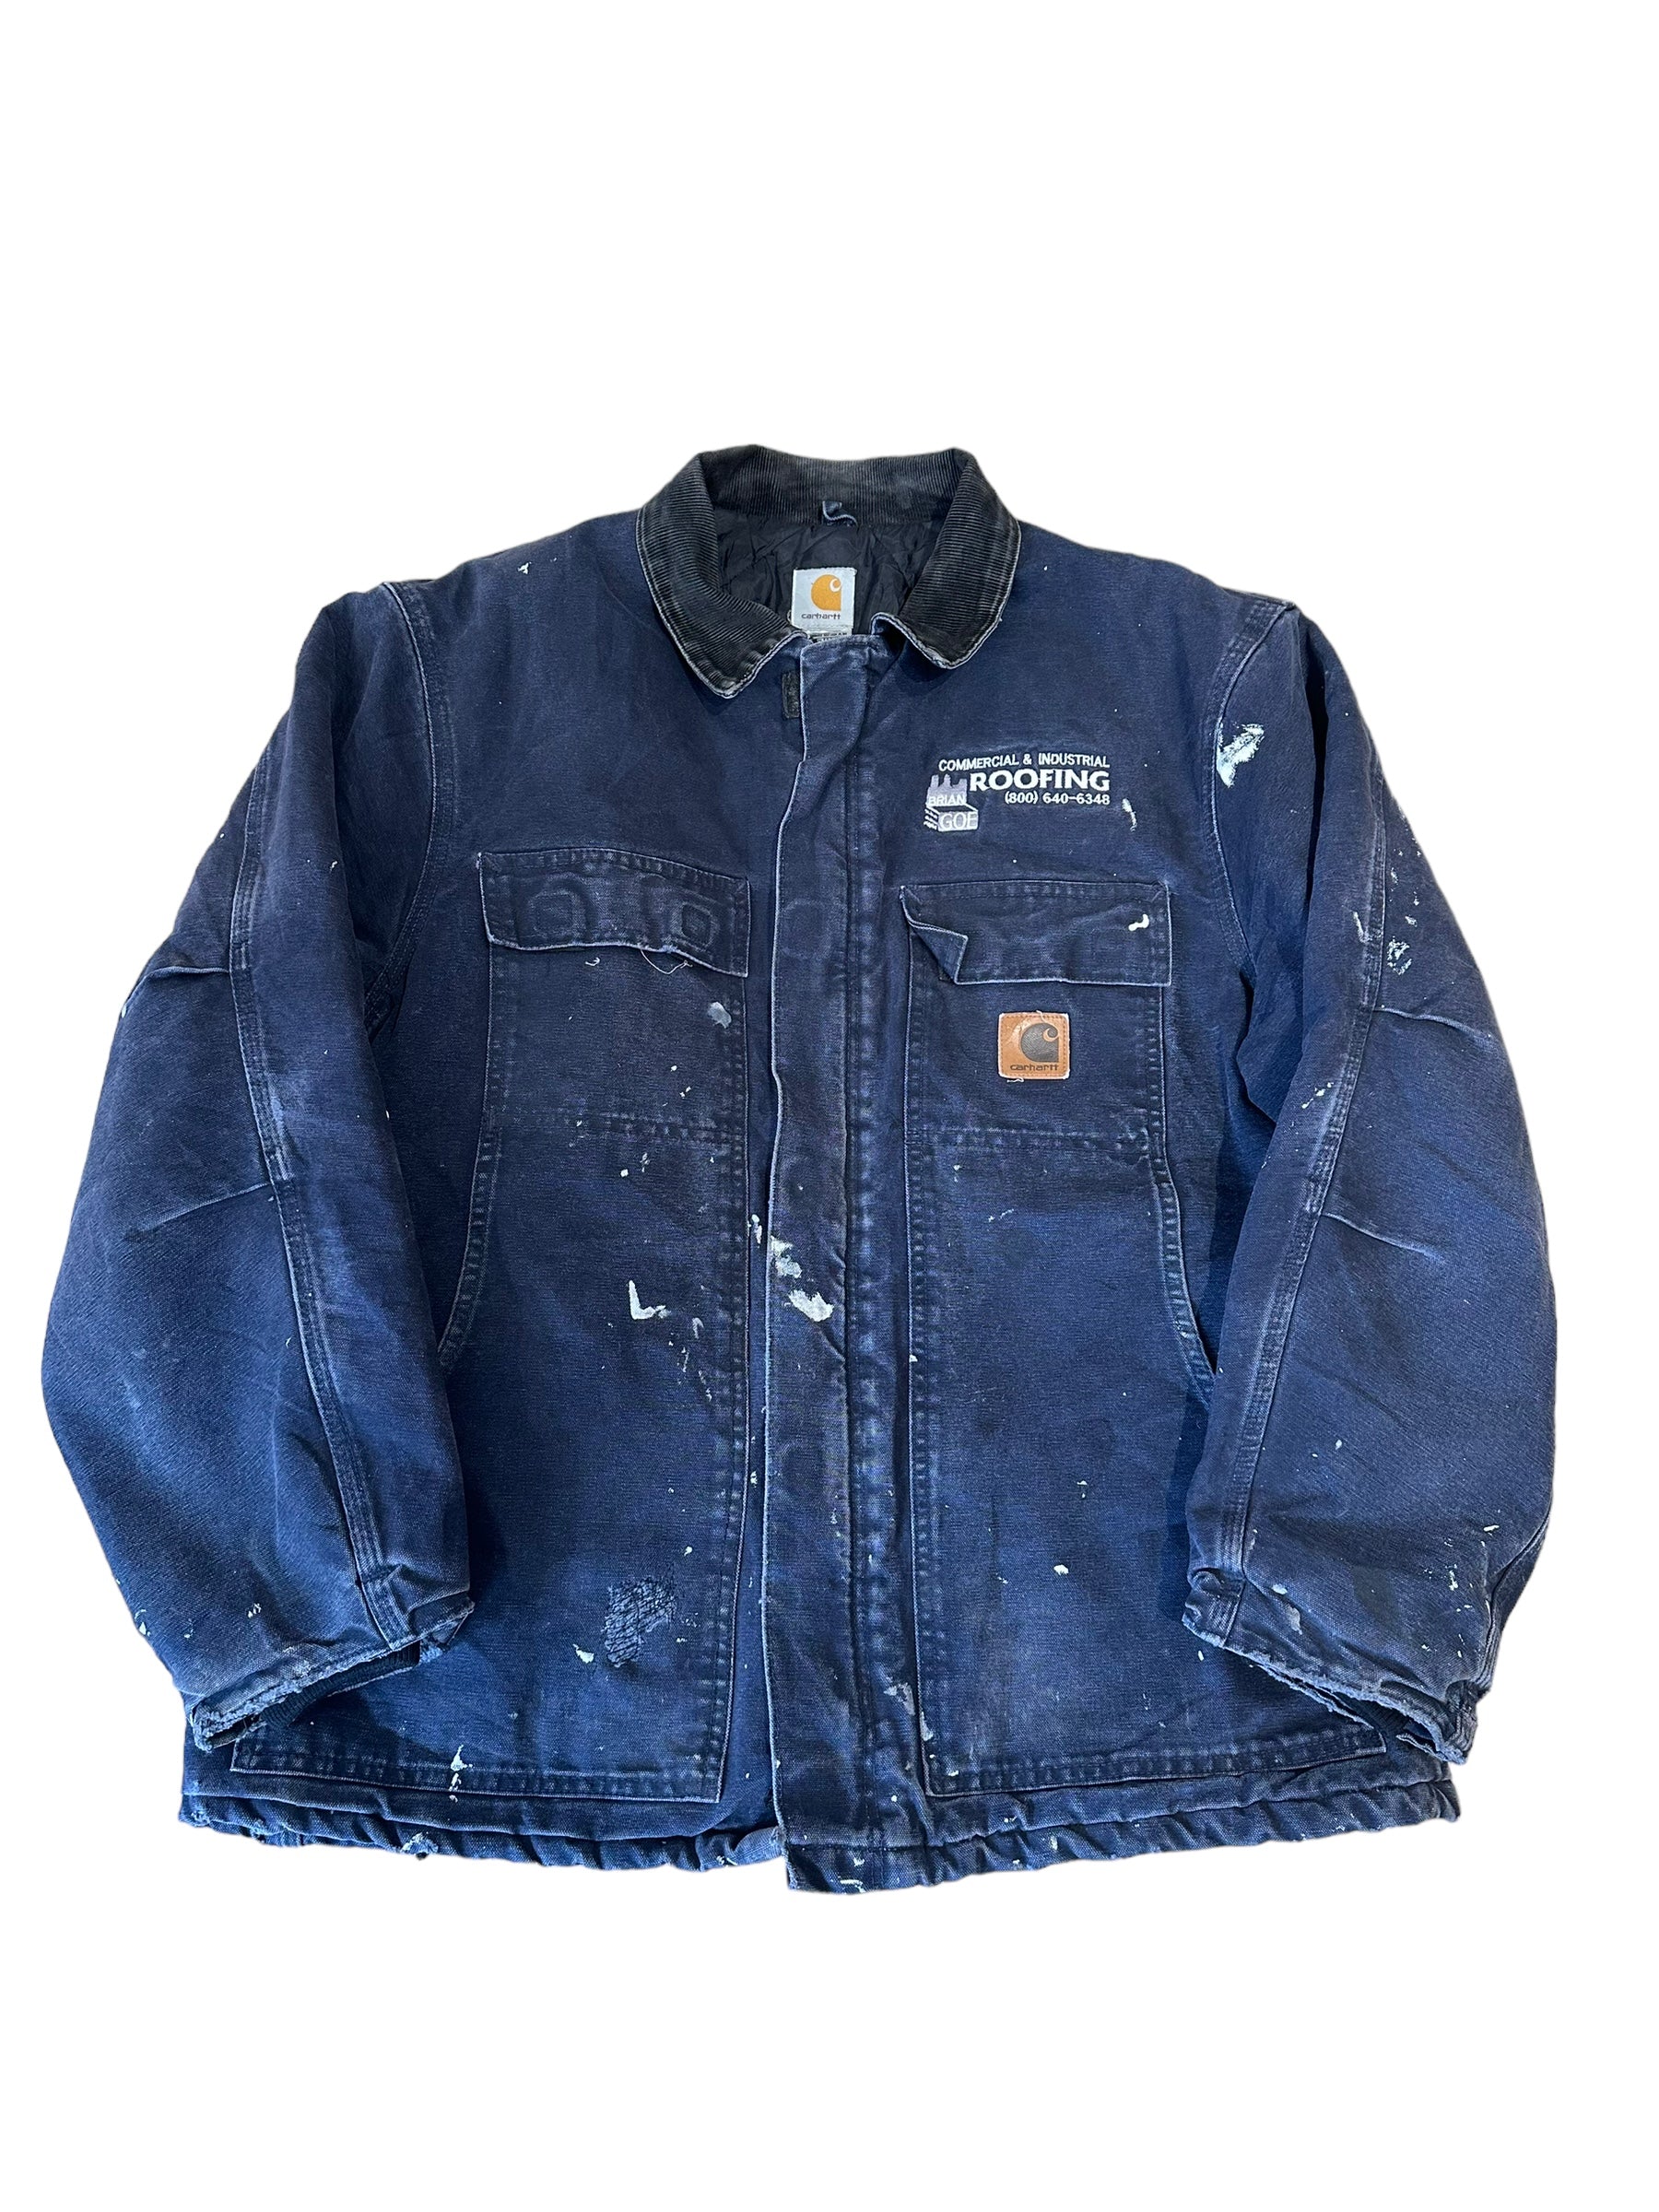 Vintage Carhartt jacket L